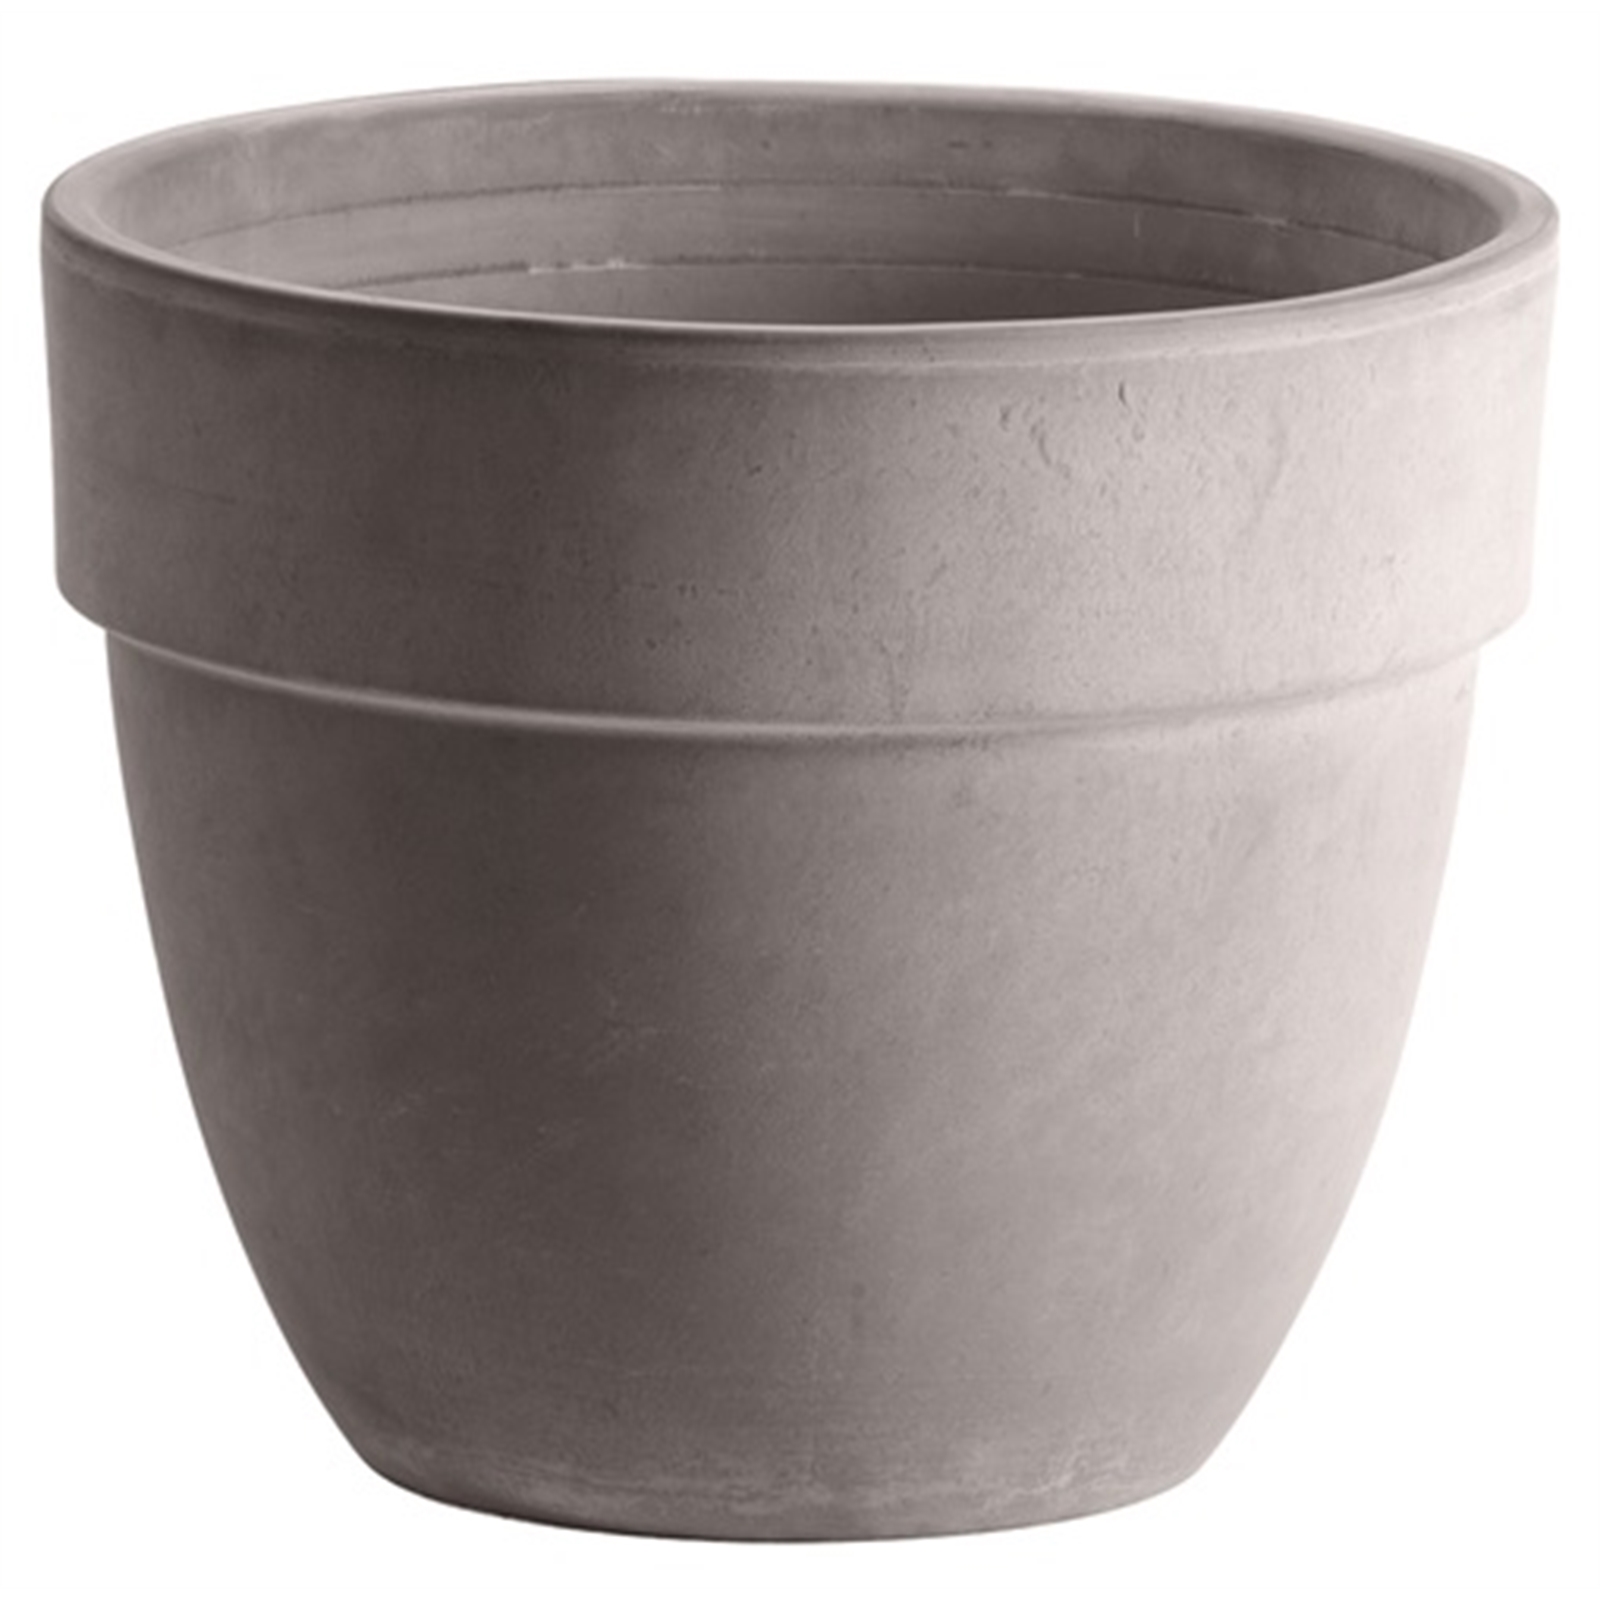 Northcote Pottery 16cm Greige Patavium Terracotta Pot